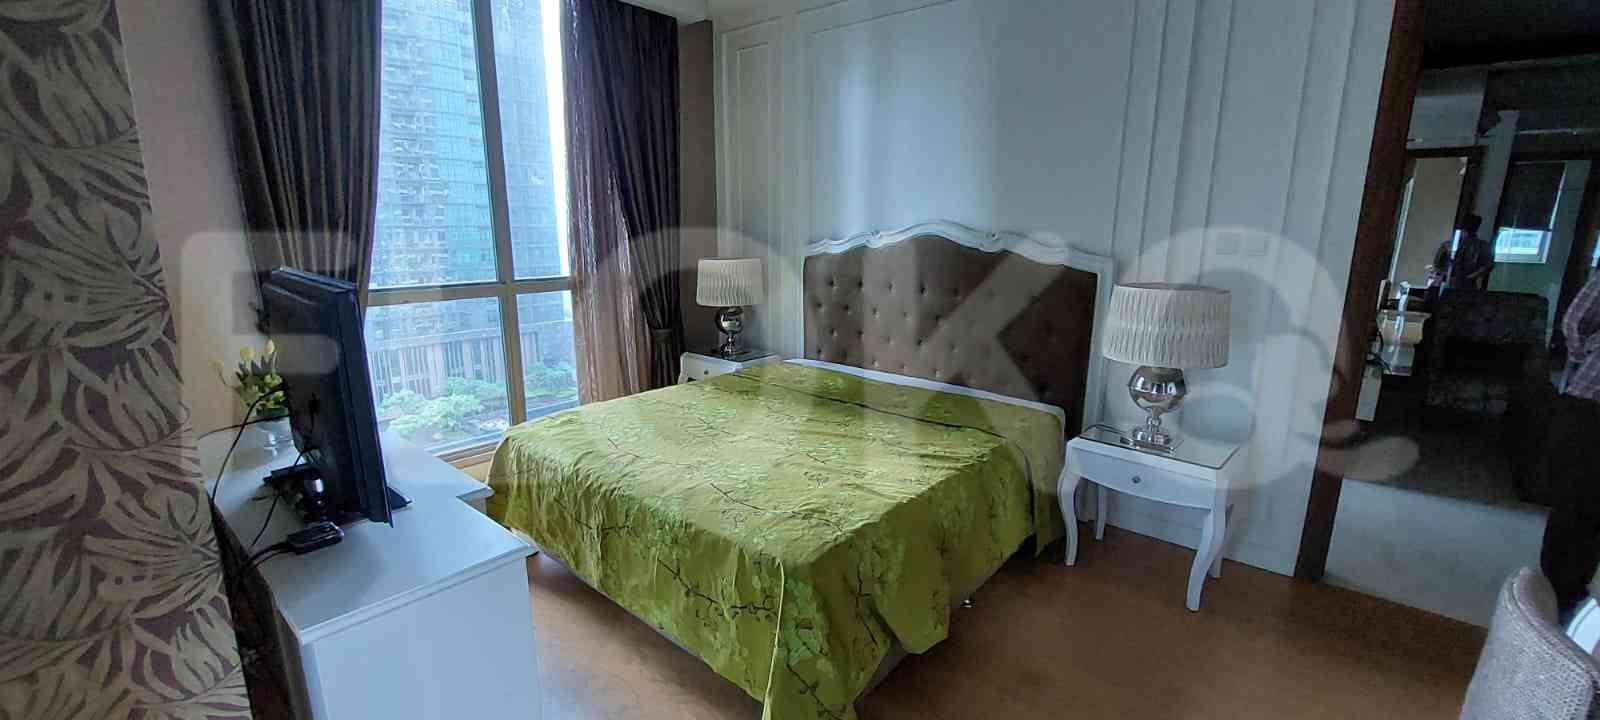 2 Bedroom on 19th Floor for Rent in Kemang Village Residence - fkeb83 1